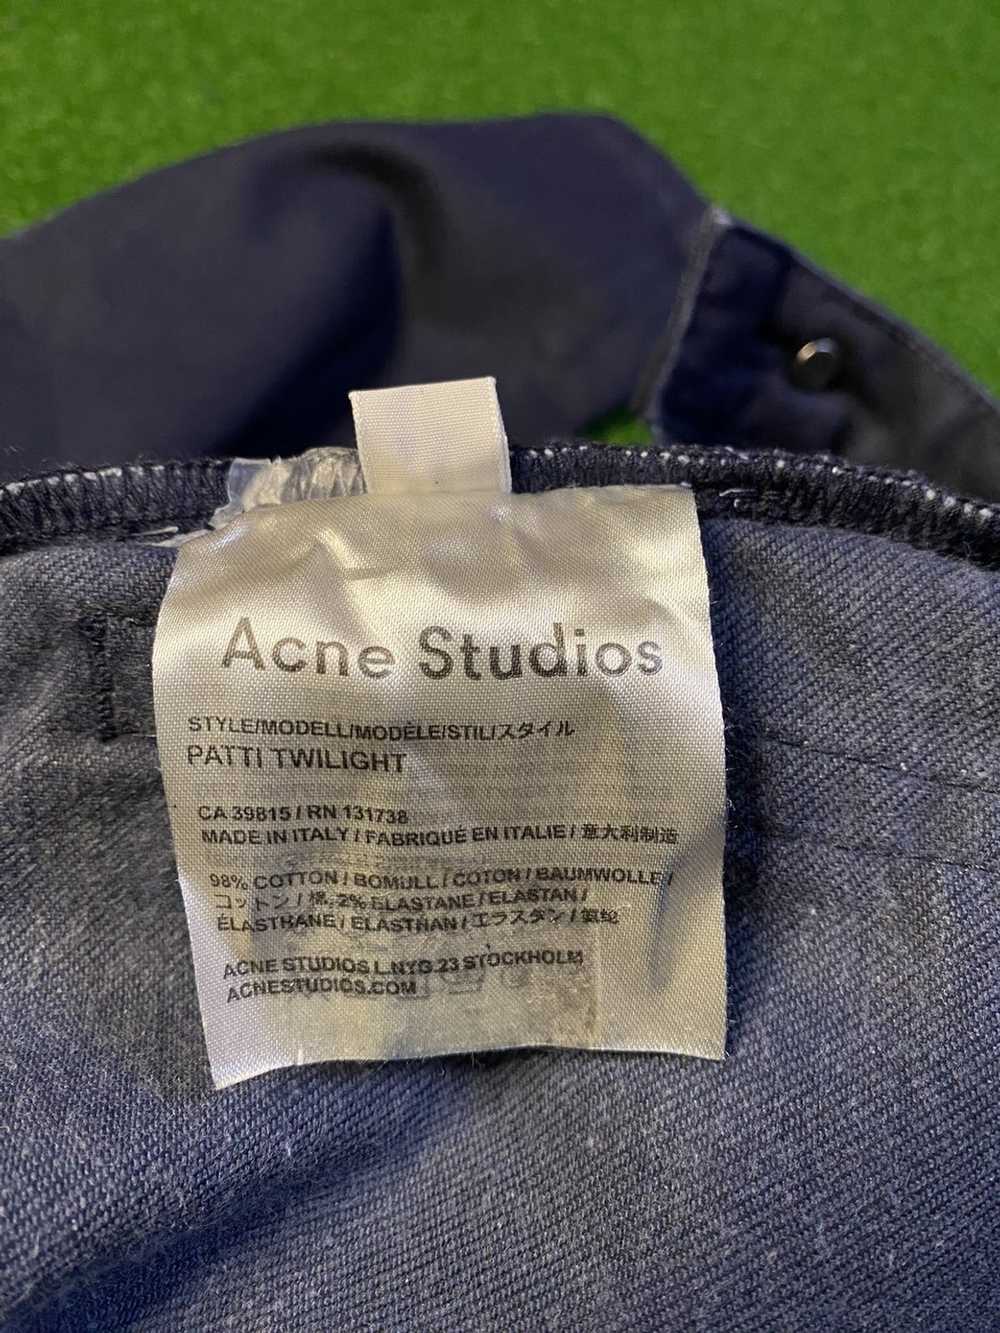 Acne Studios Acne Studios Twilight Patti Jeans - image 9